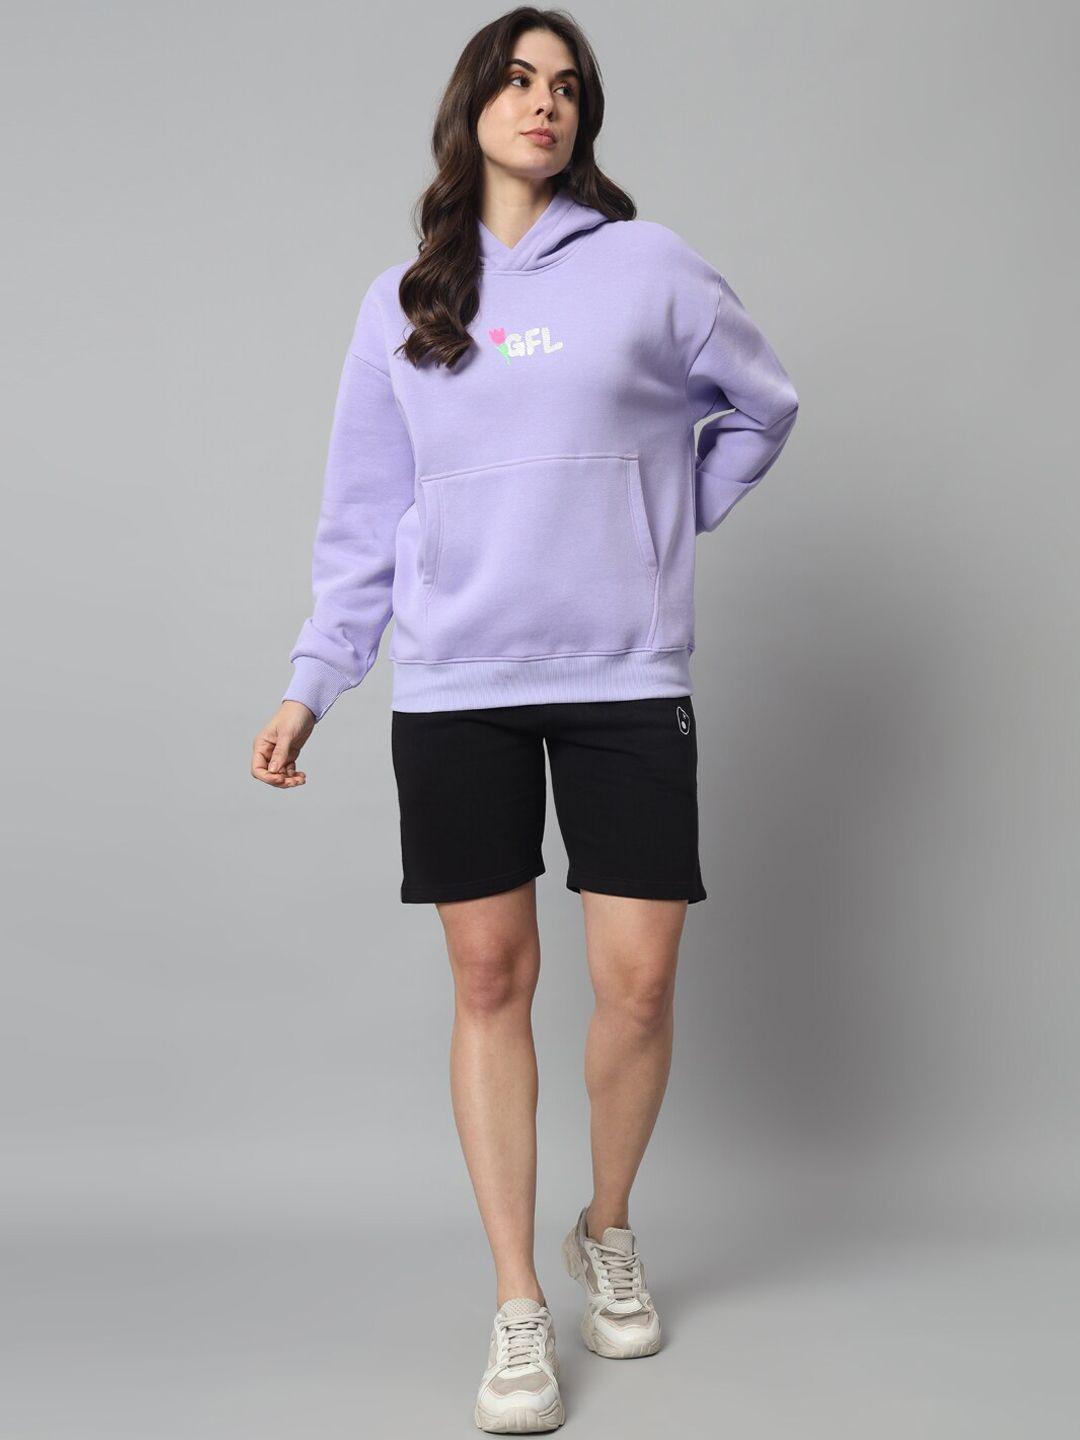 griffel printed hooded fleece cotton sweatshirt with shorts